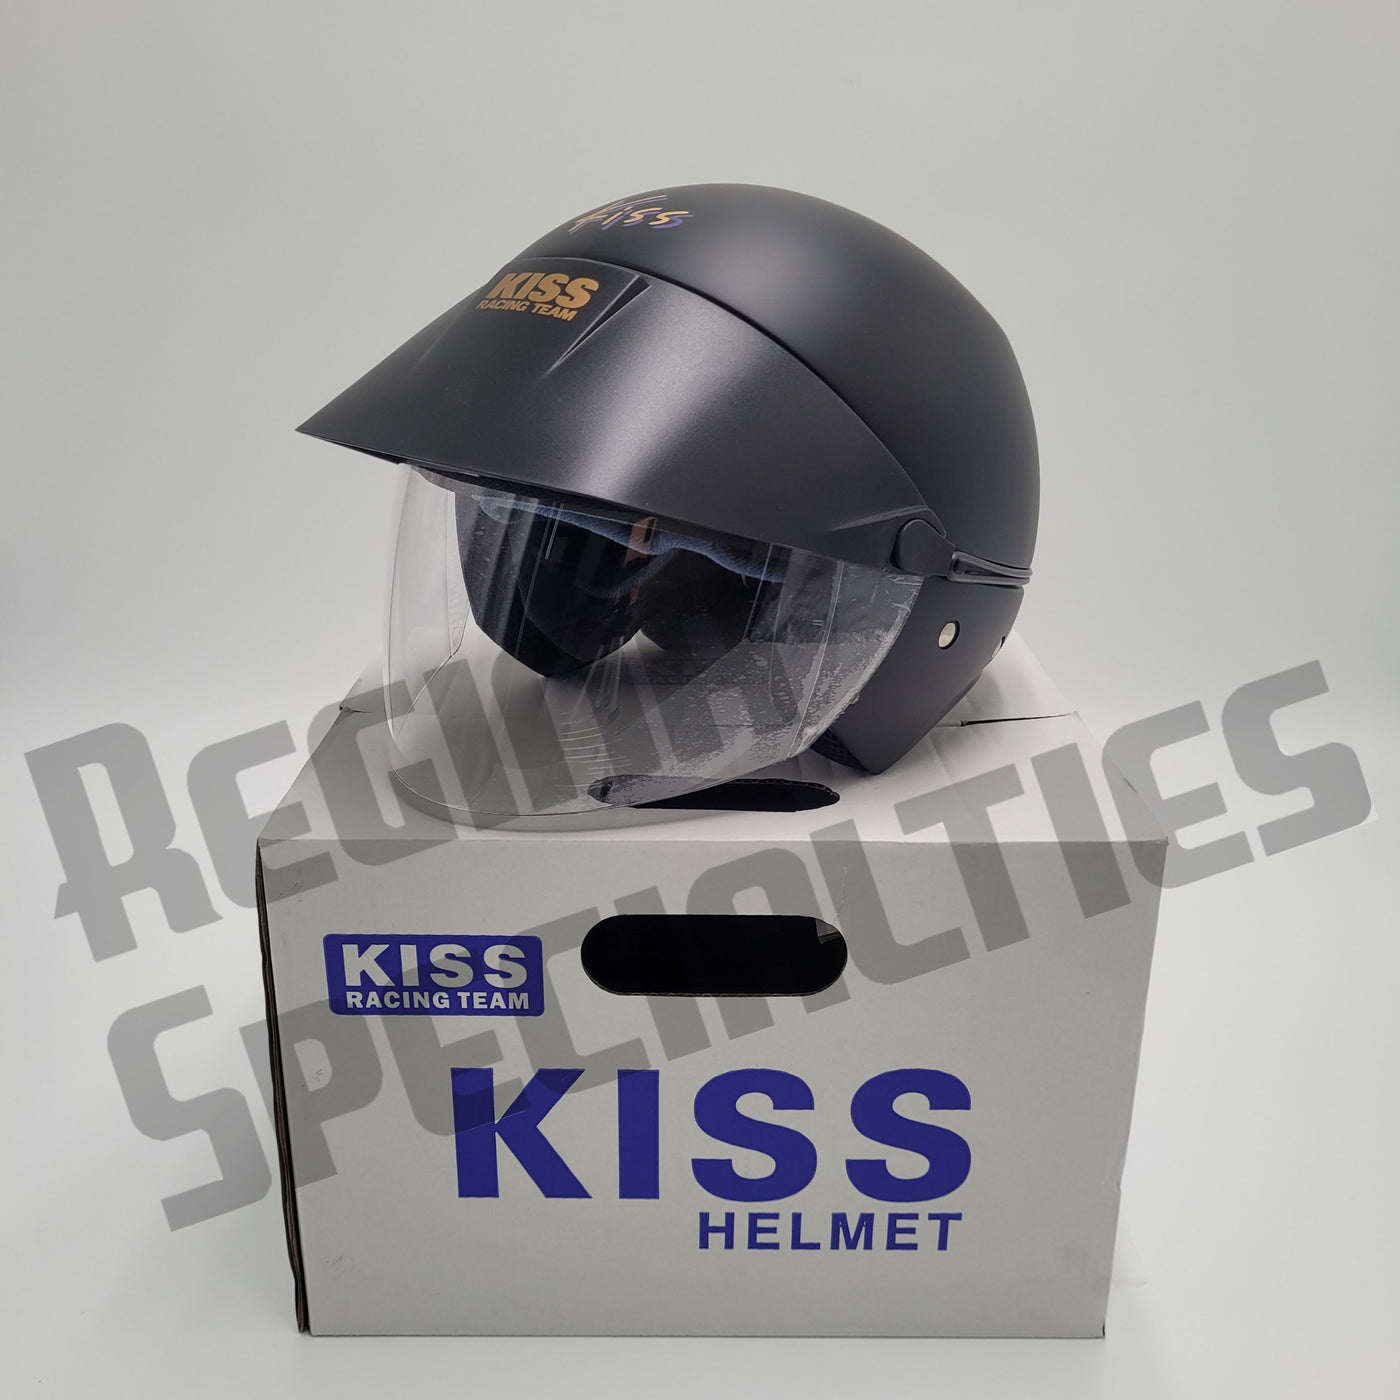 KISS Matt Black Helmet